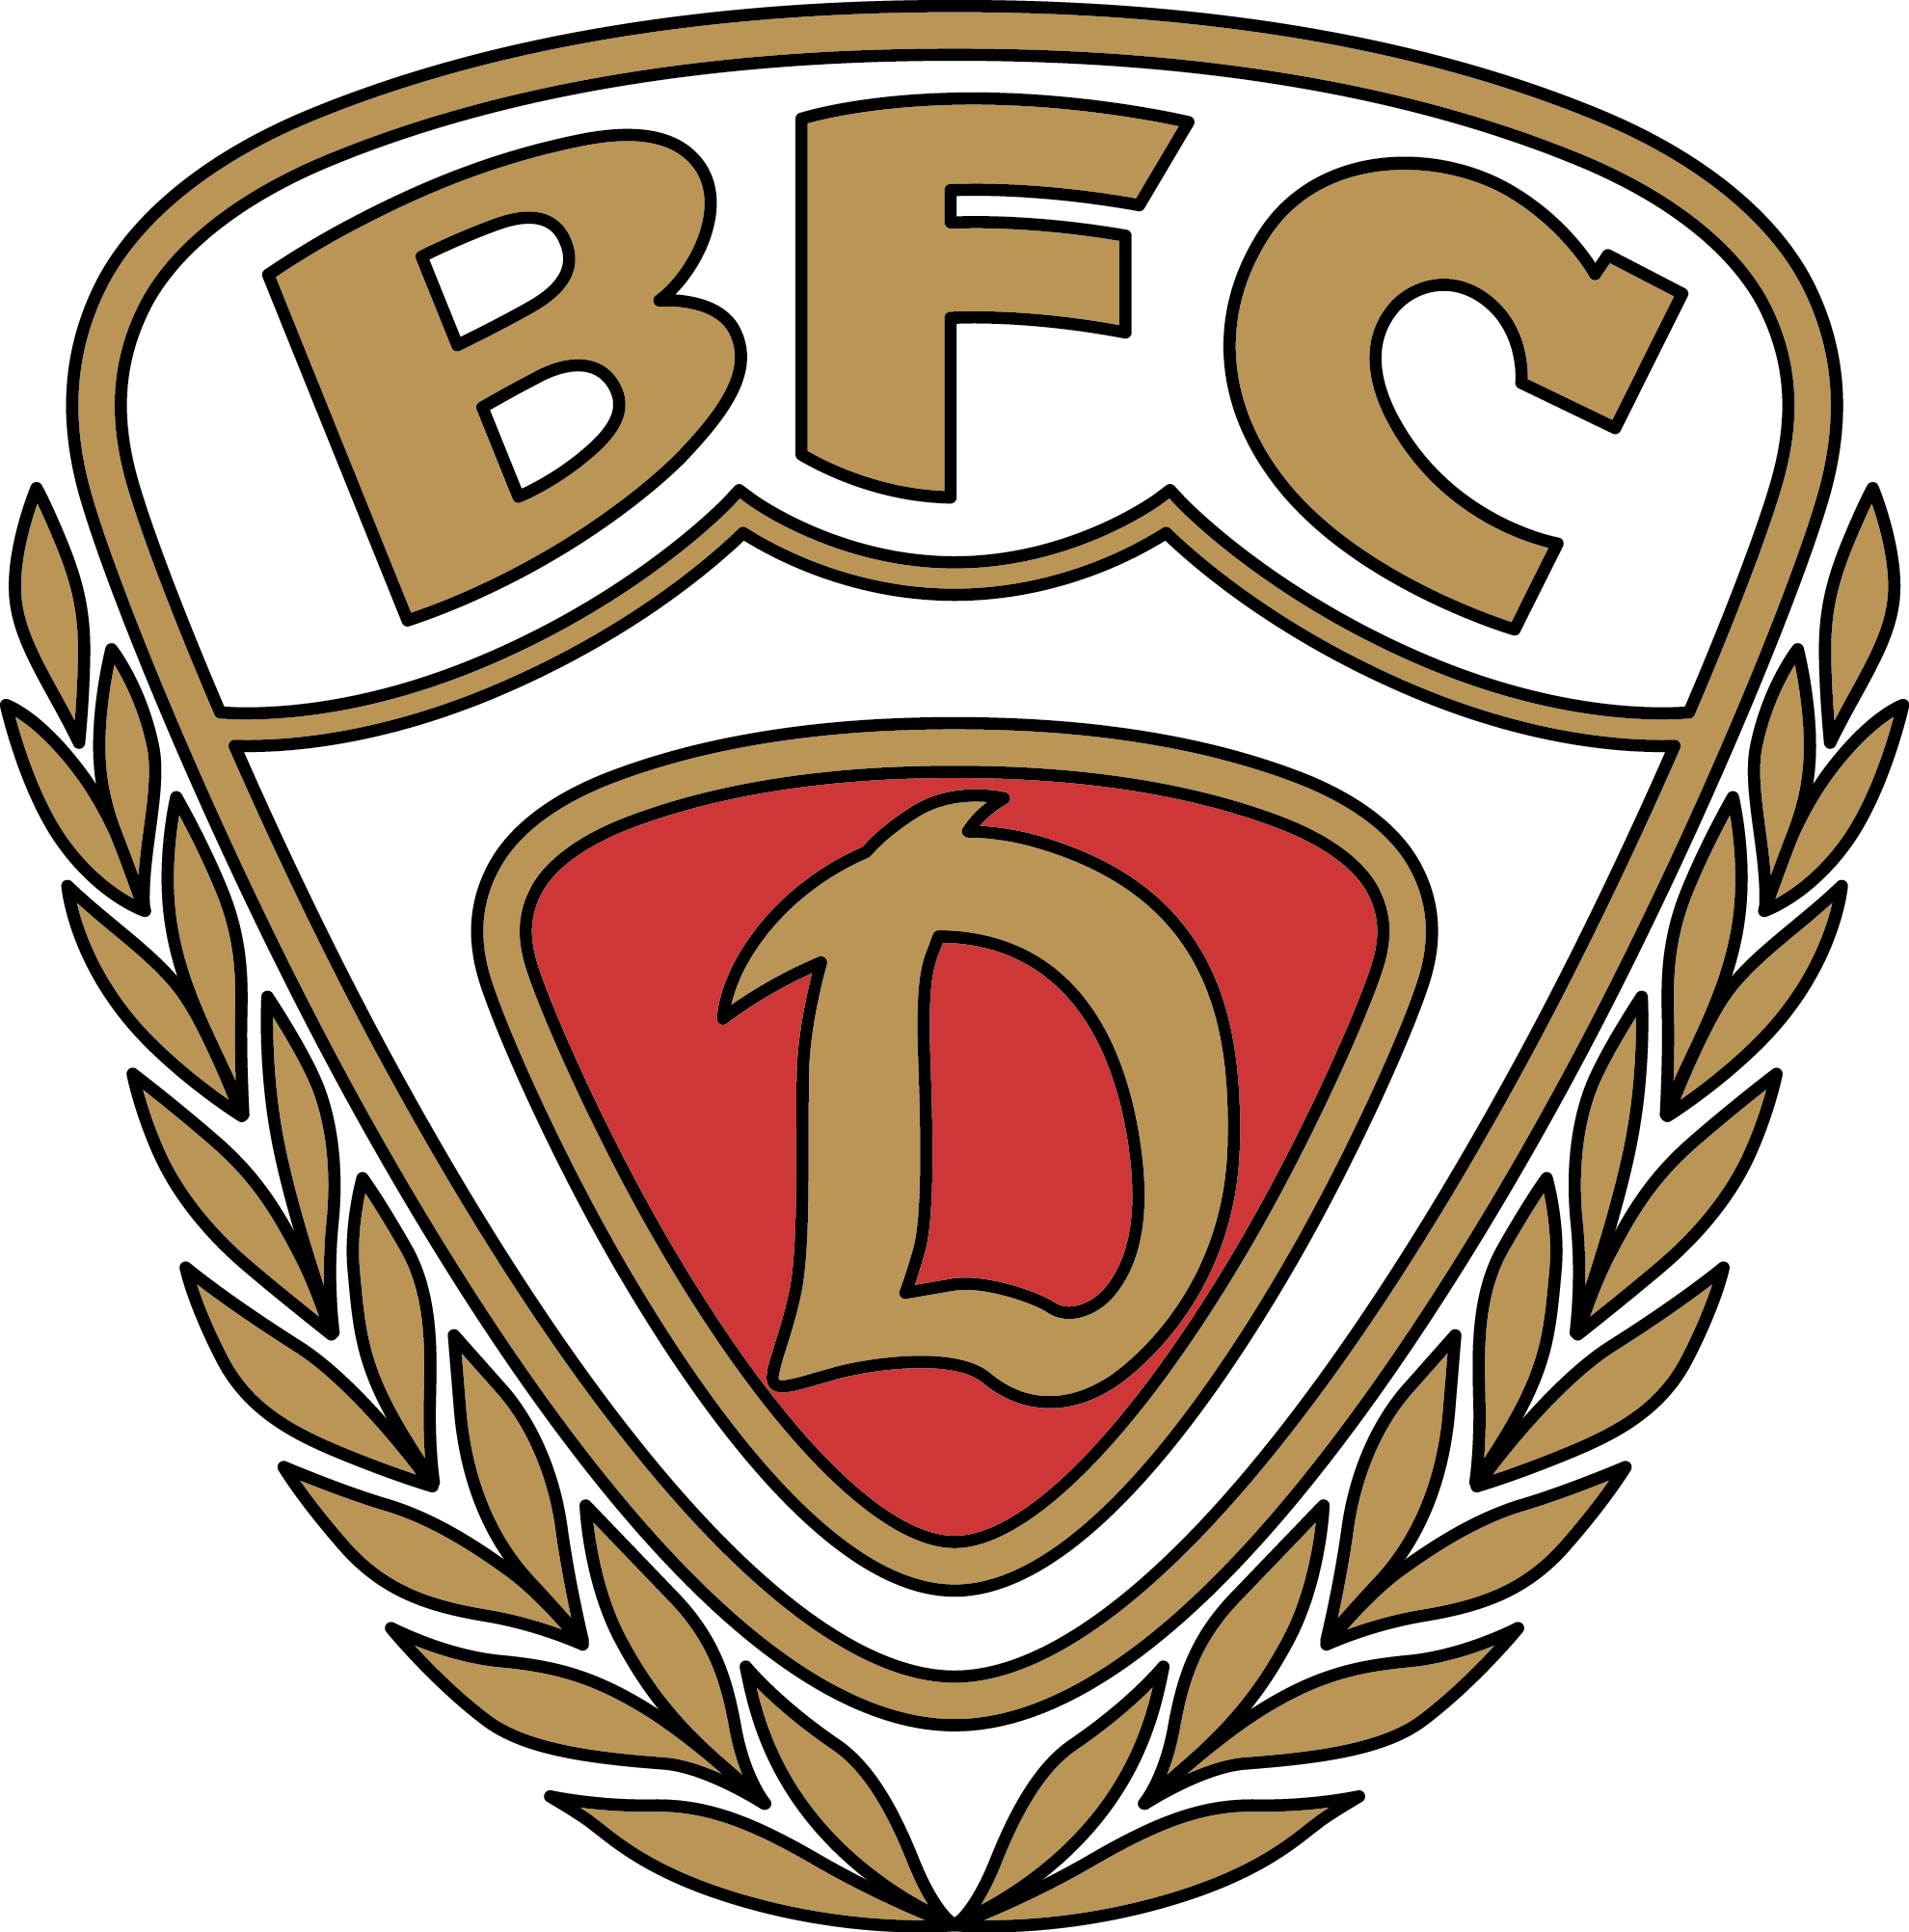 BFC Dynamo Berlin. Fussball, Verein